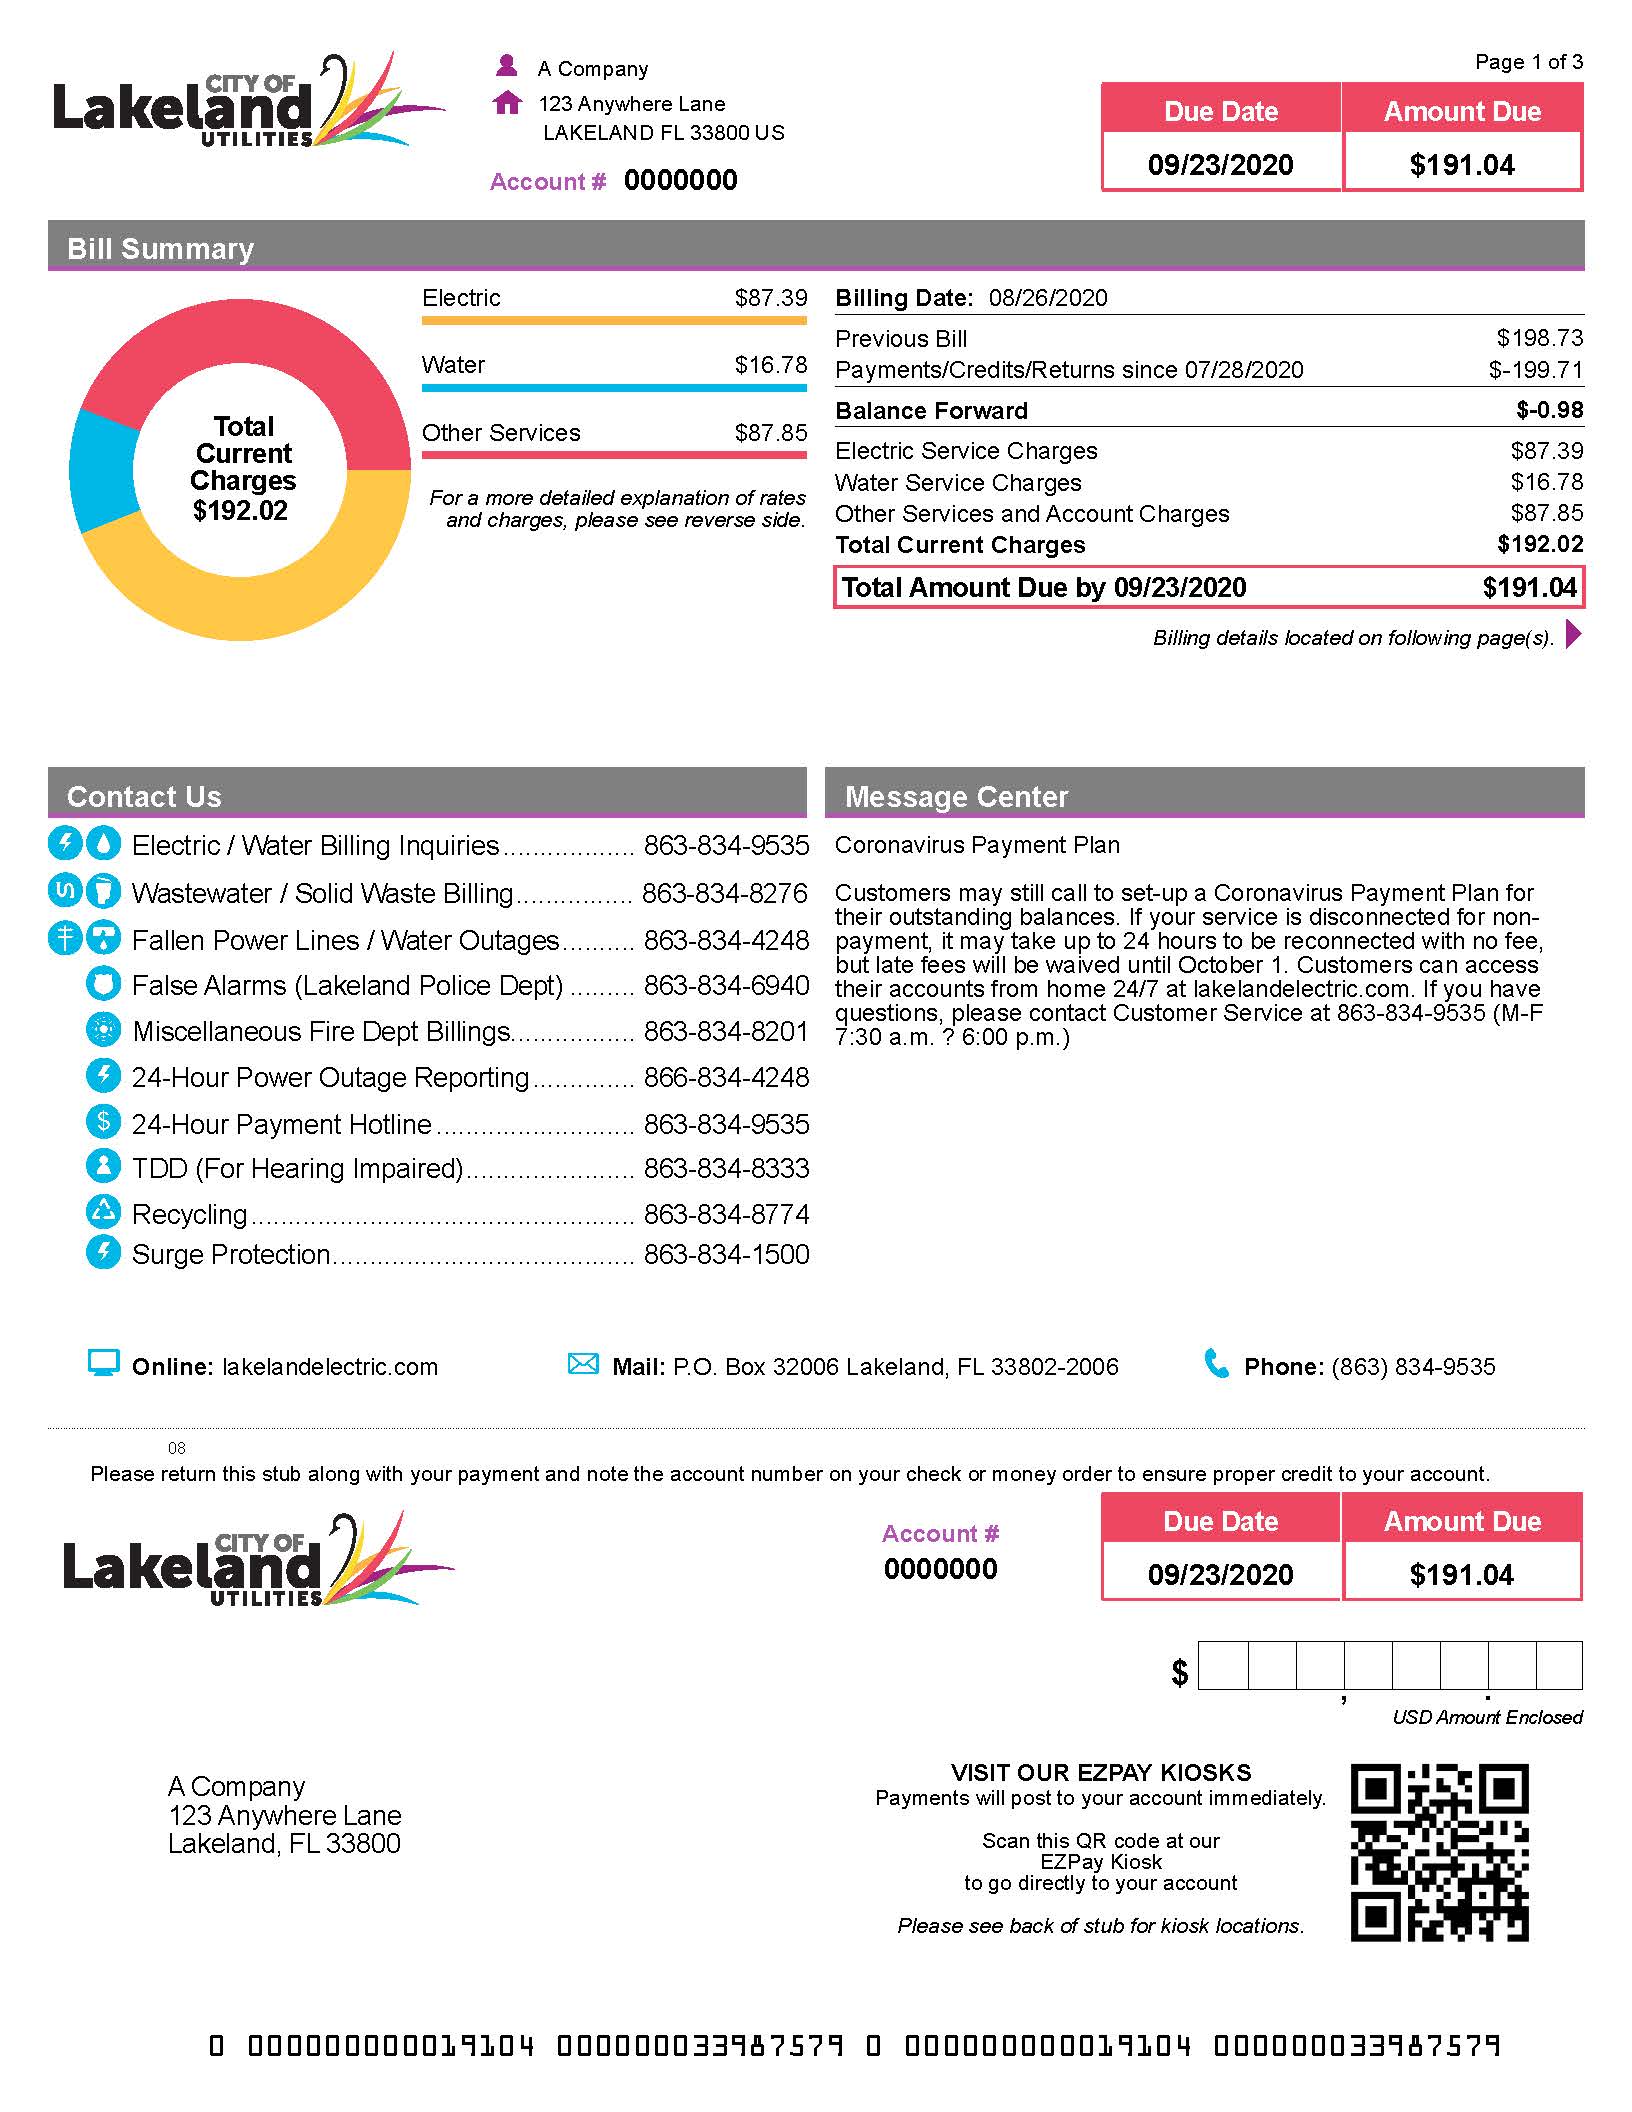 Lakeland Electric Bill Pay Online & Customer Service